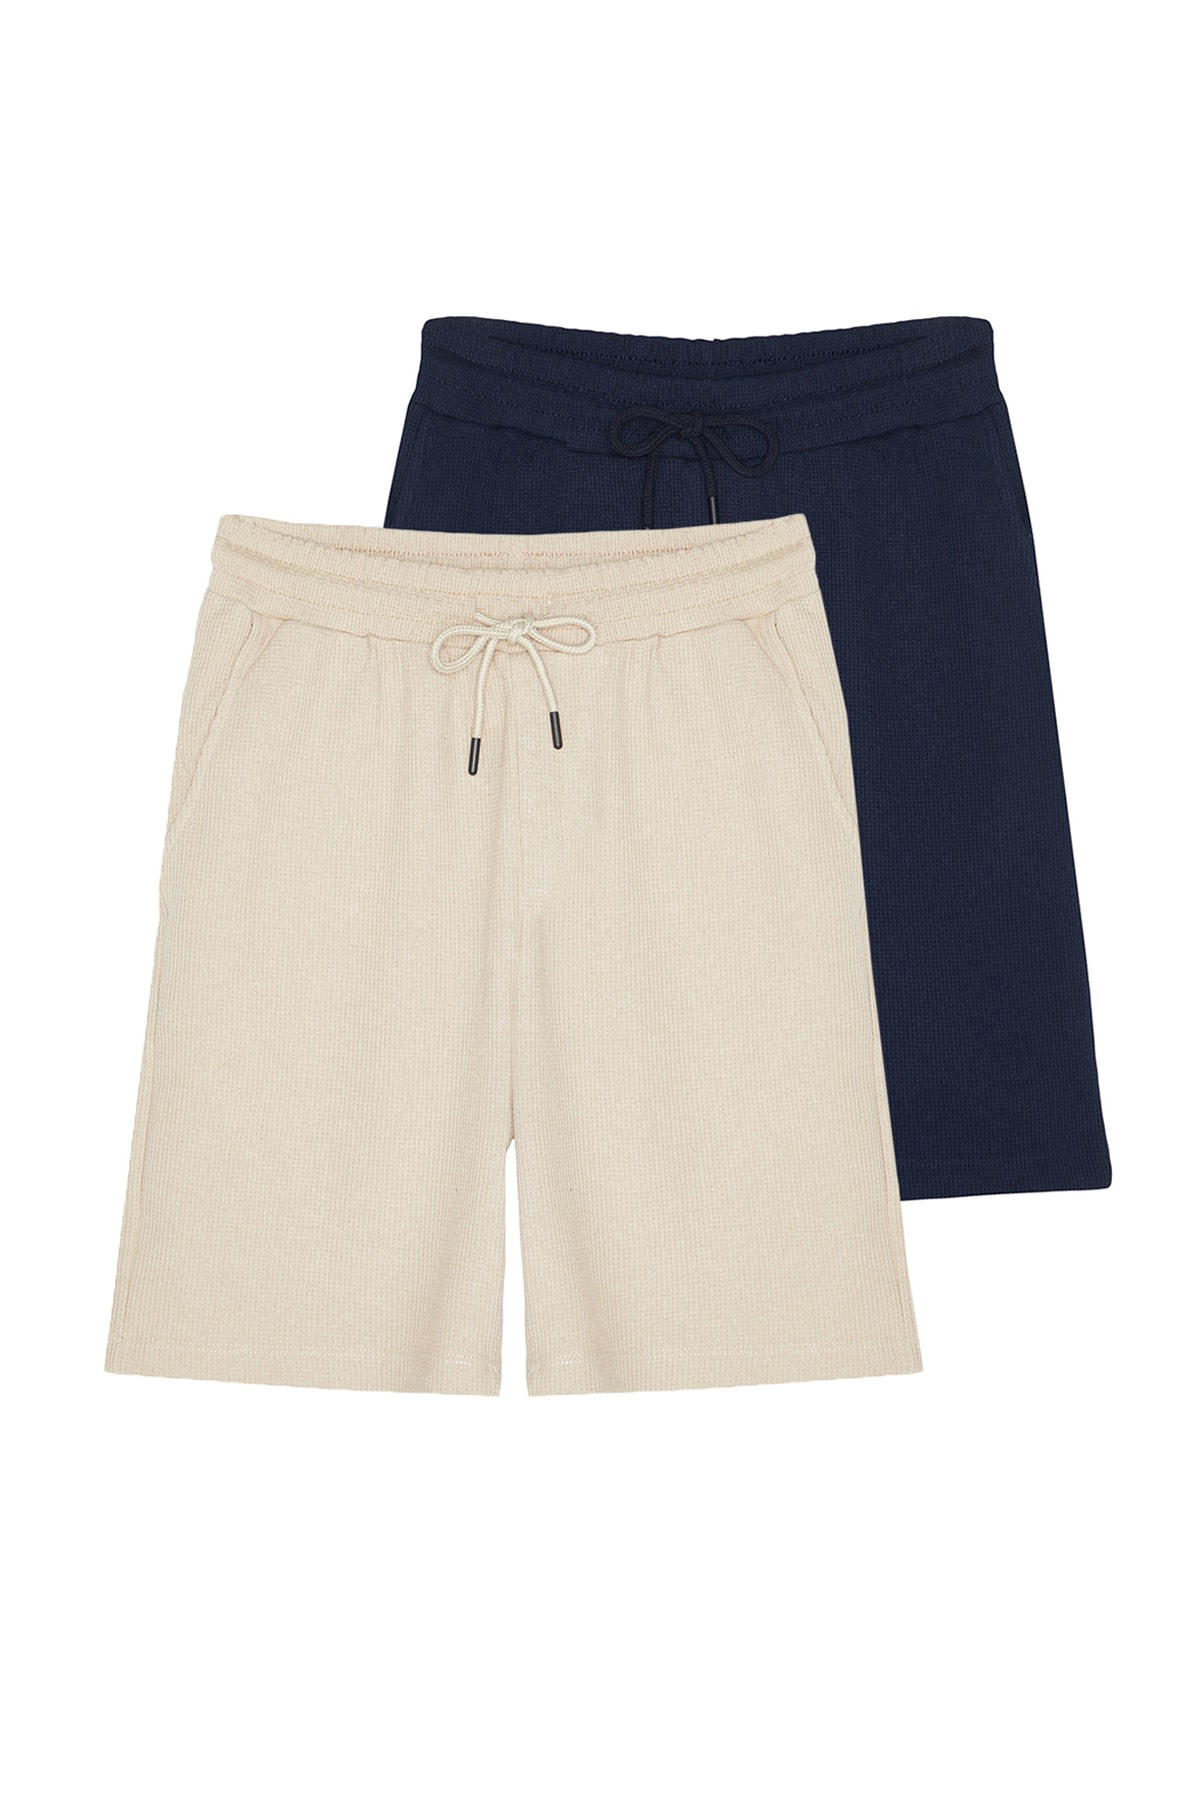 Trendyol Navy Blue-Beige Men's Regular Fit Textured 2-Pack Shorts.